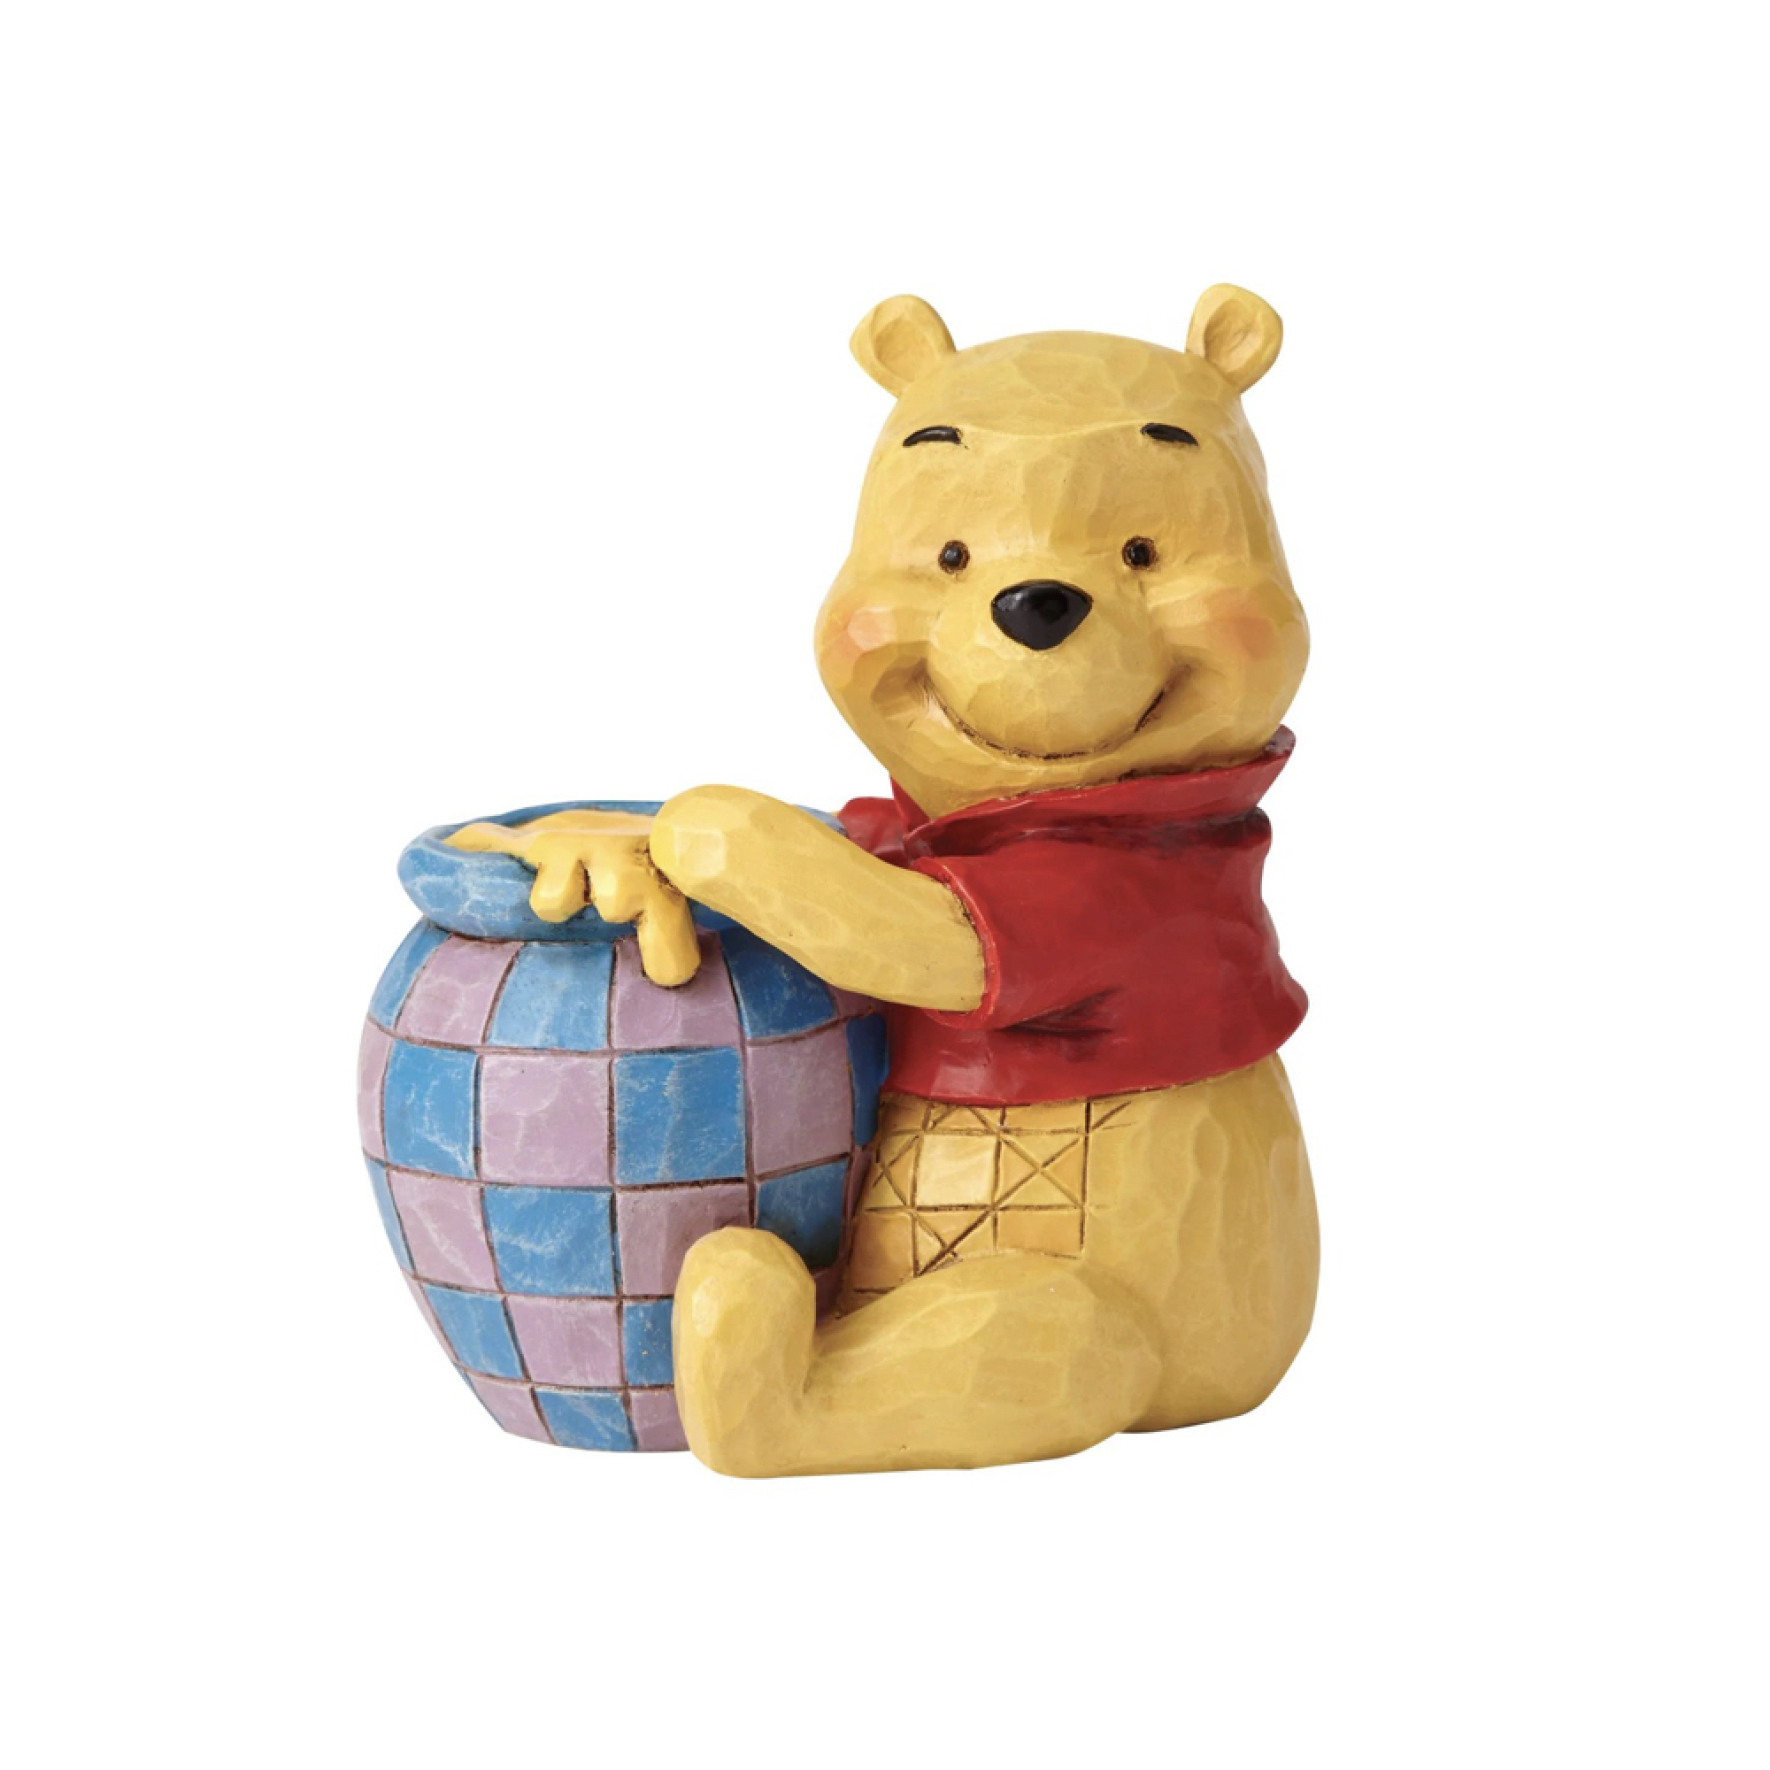  فیگور دیزنی مینی پو Winnie the Pooh 